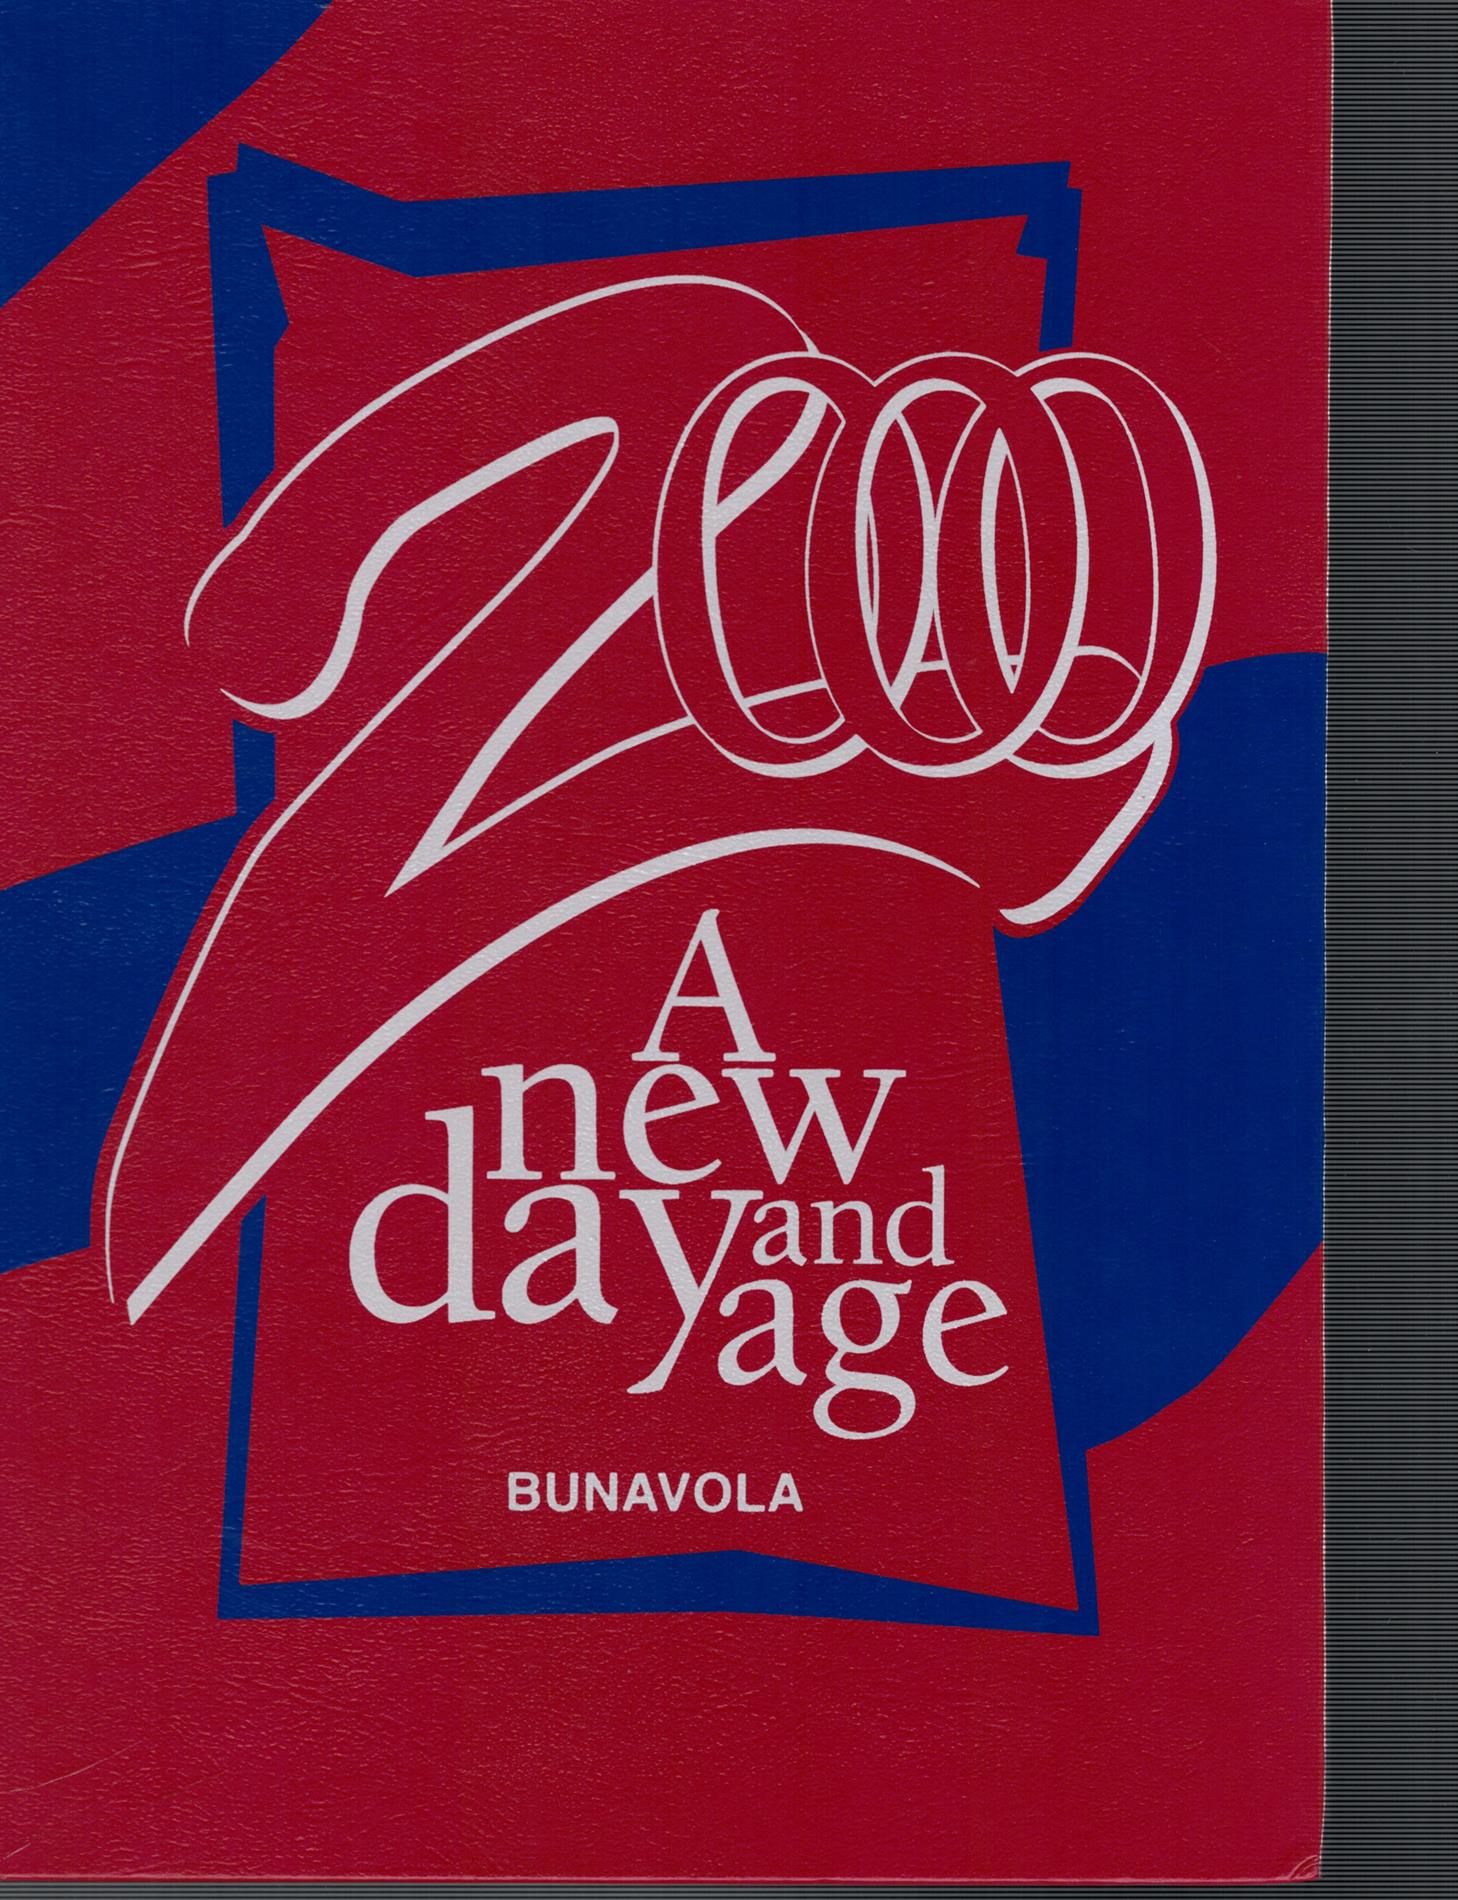 2000 Bunavola